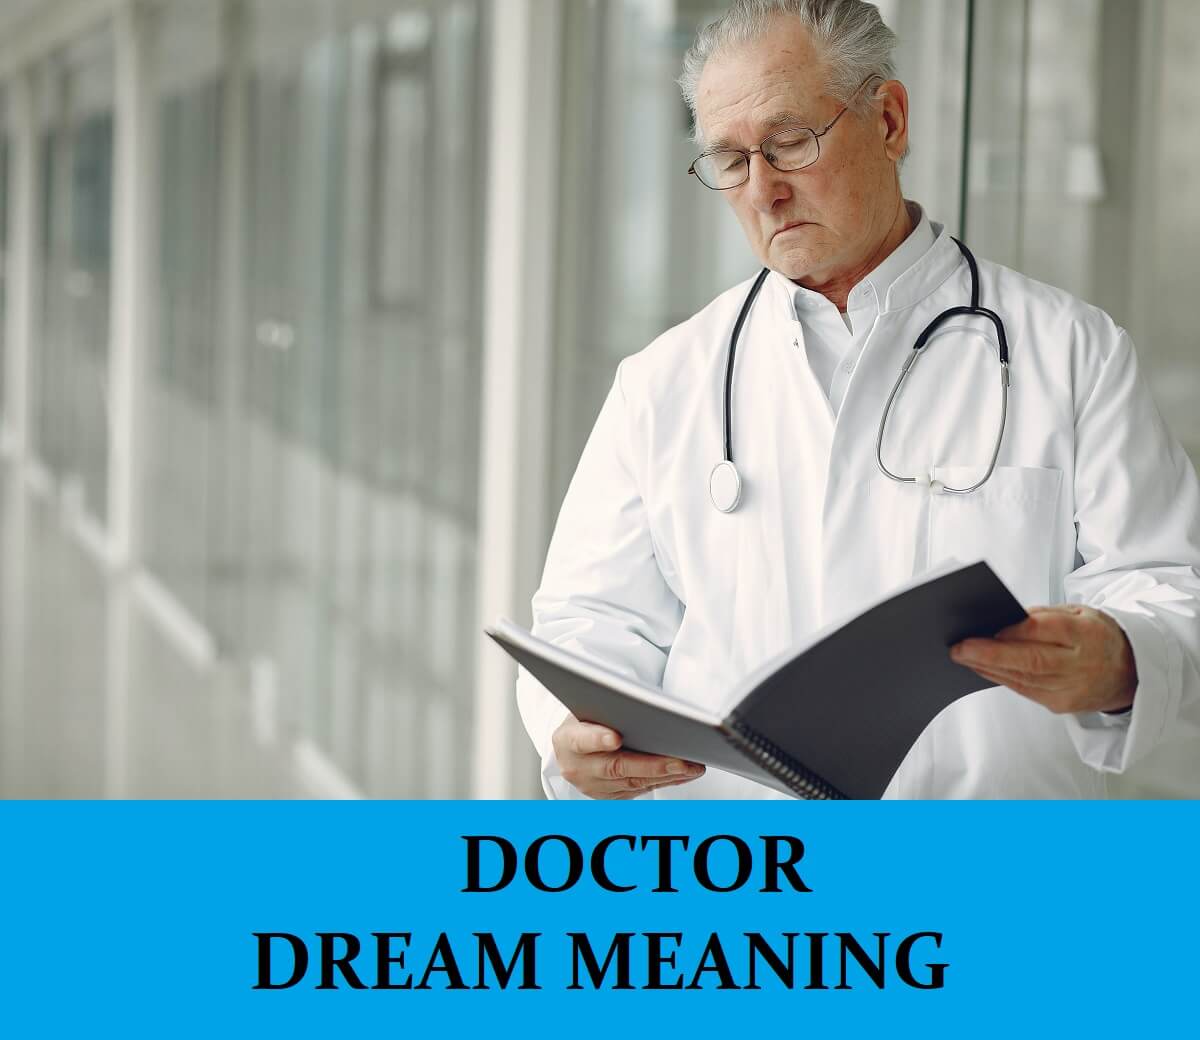 Dream About Doctors